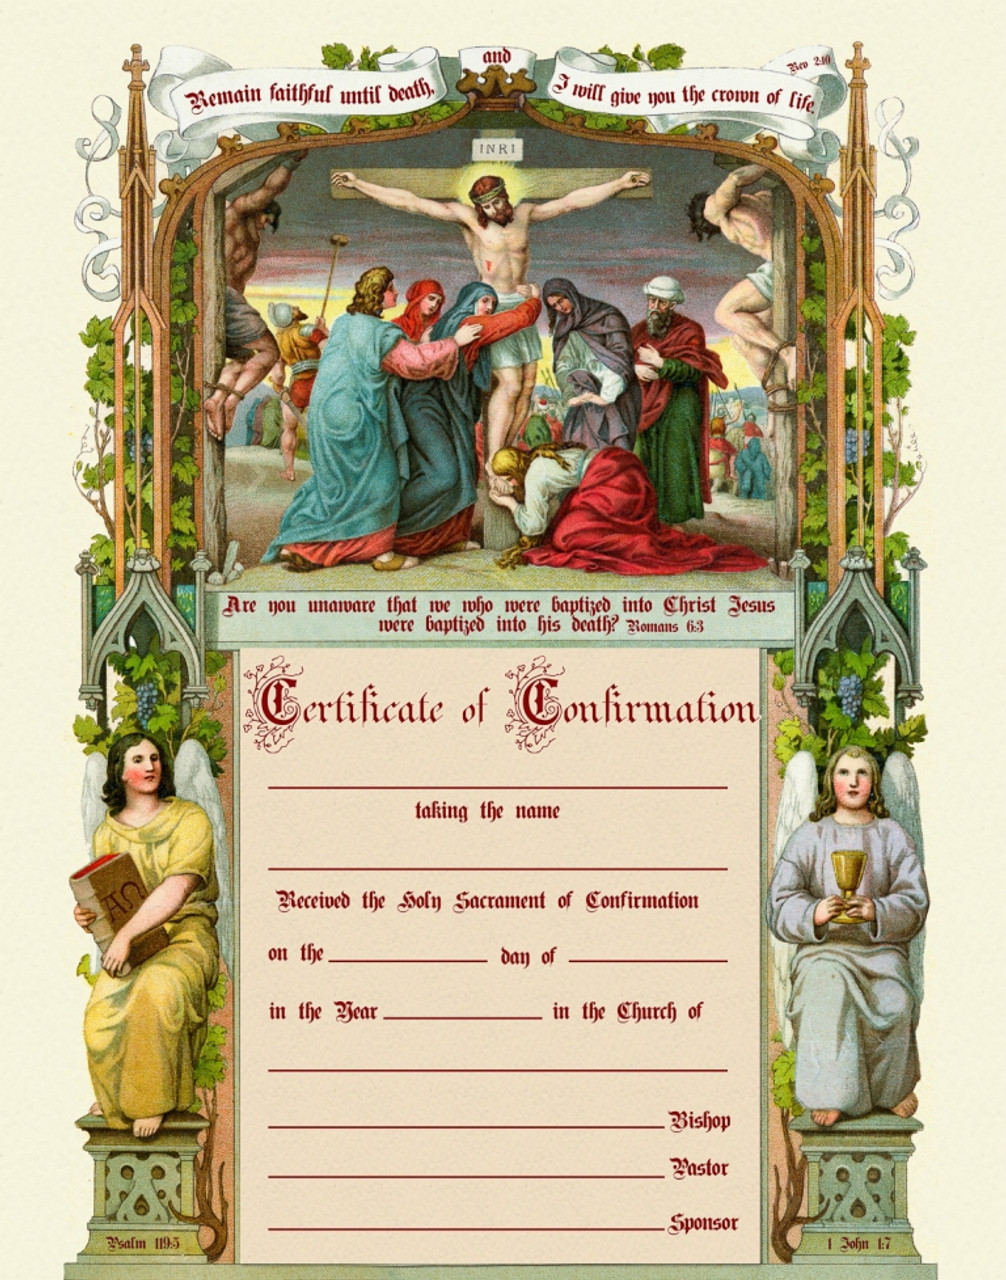 sacrament of confirmation